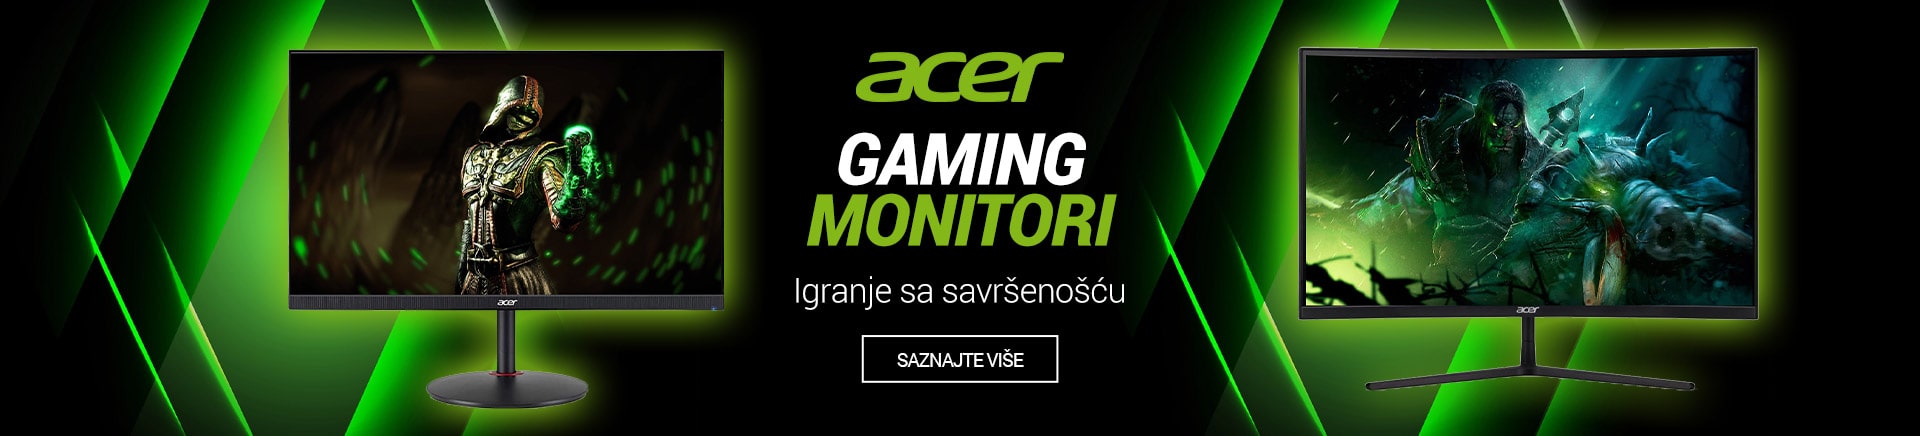 HR Acer gaming monitori MOBILE 380 X 436-min.jpg